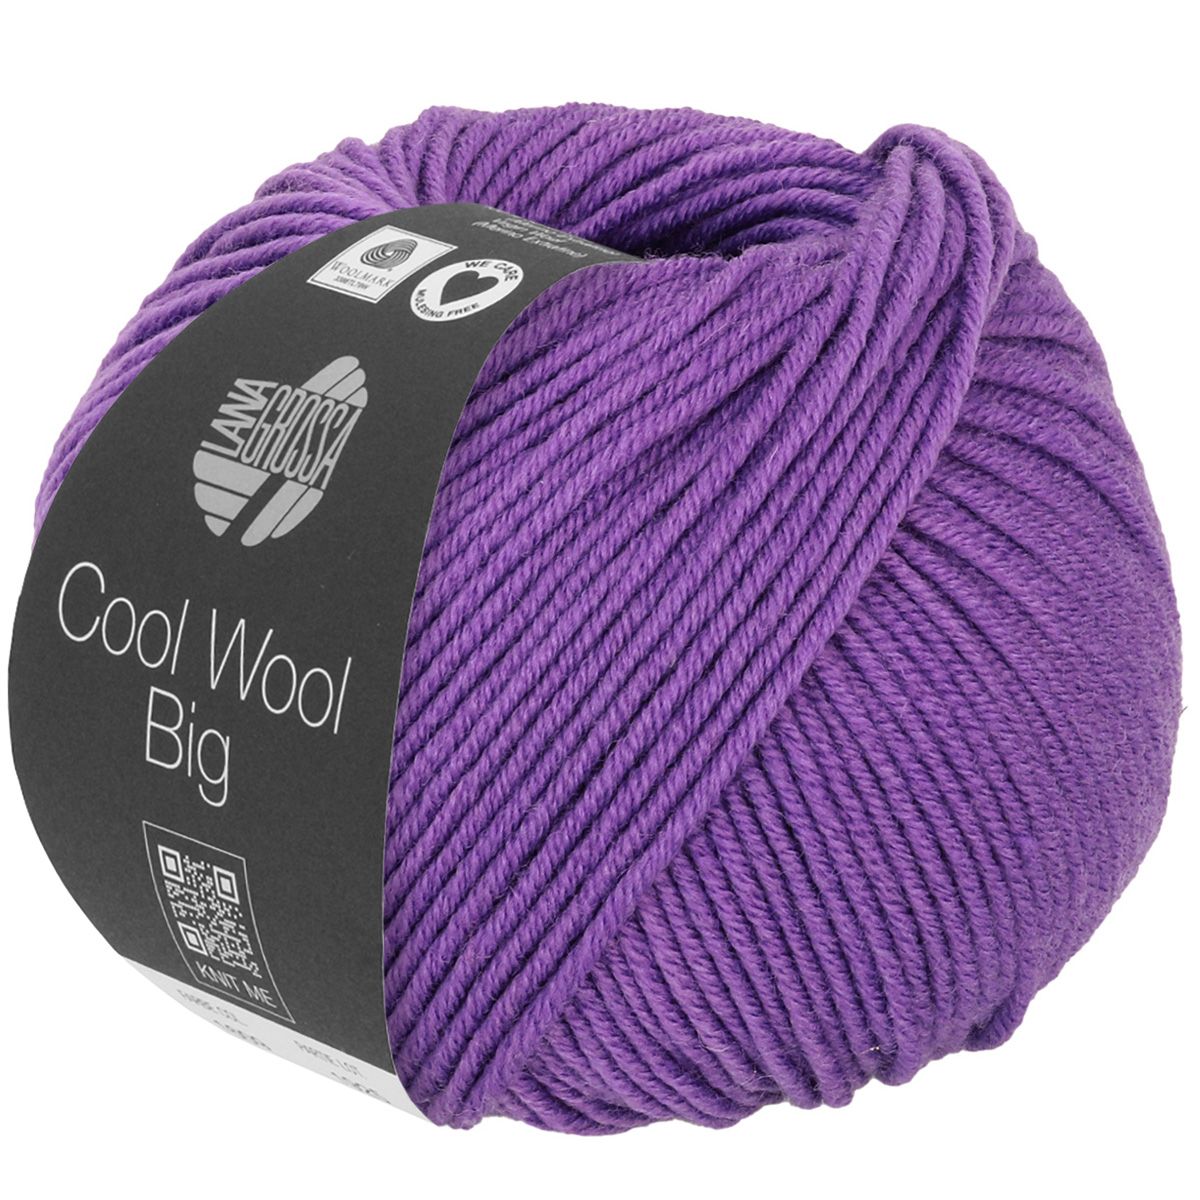 Lana Grossa Cool Wool Big kleur 1018